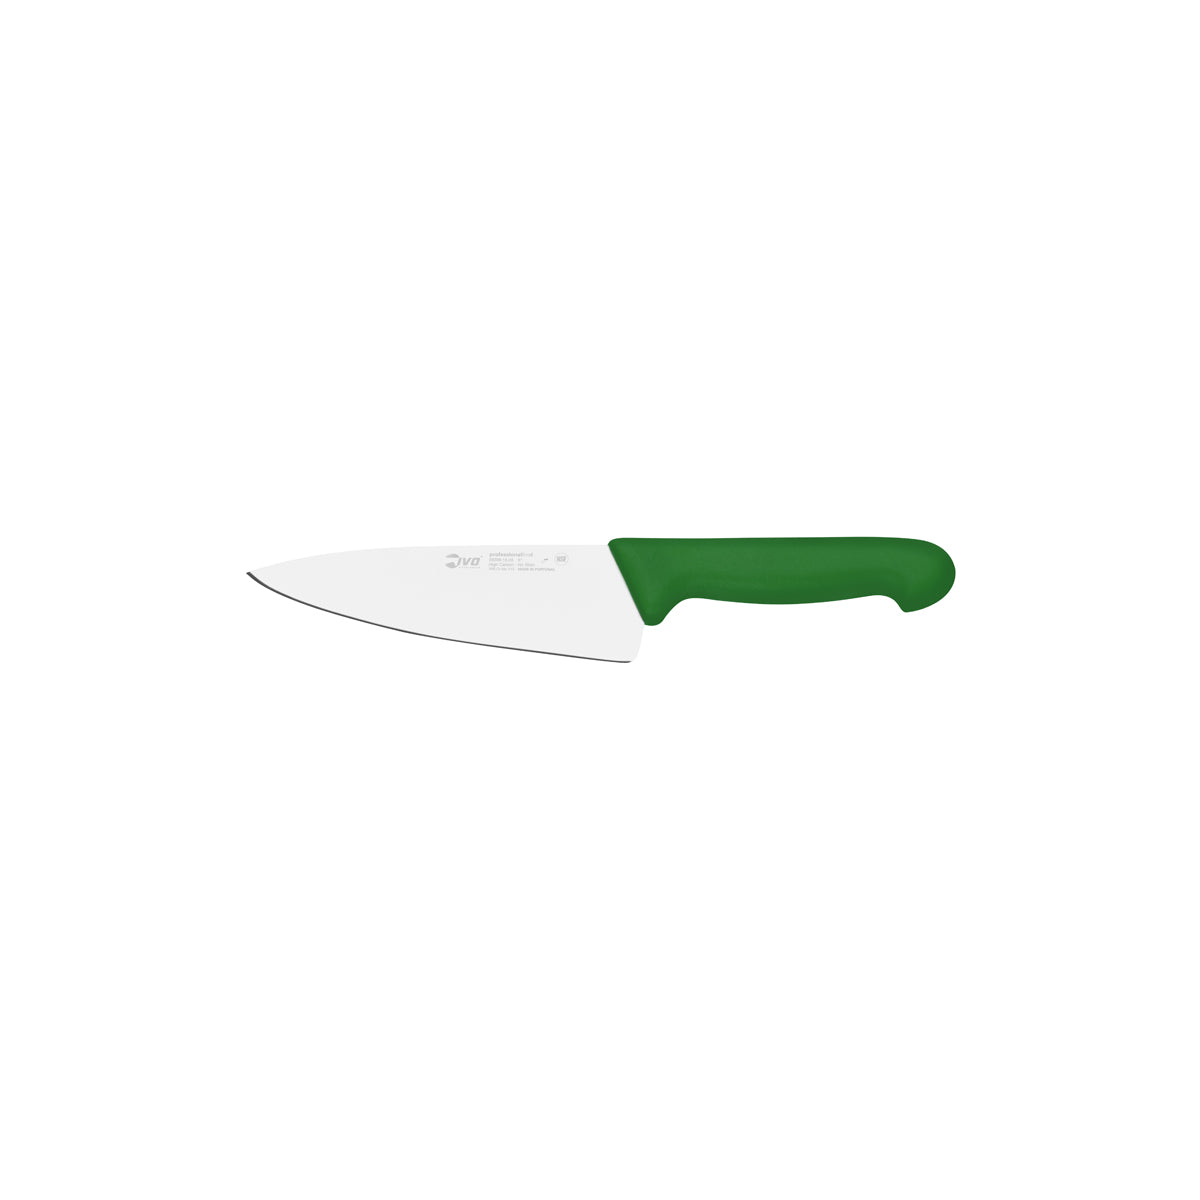 25447 Ivo Professional Line I Cooks Knife Green 150mm Tomkin Australia Hospitality Supplies